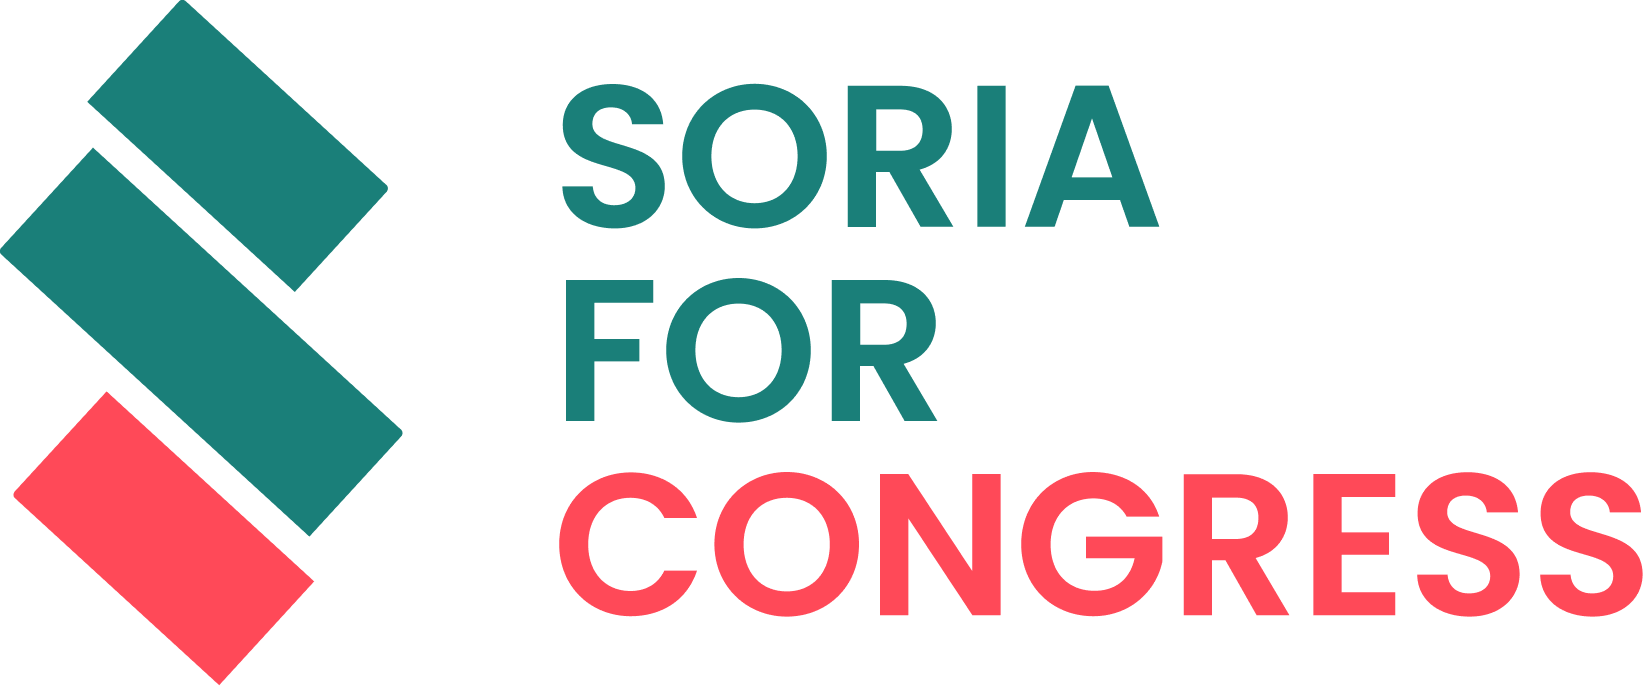 Miễn trừ trách nhiệm - Soria for Congress